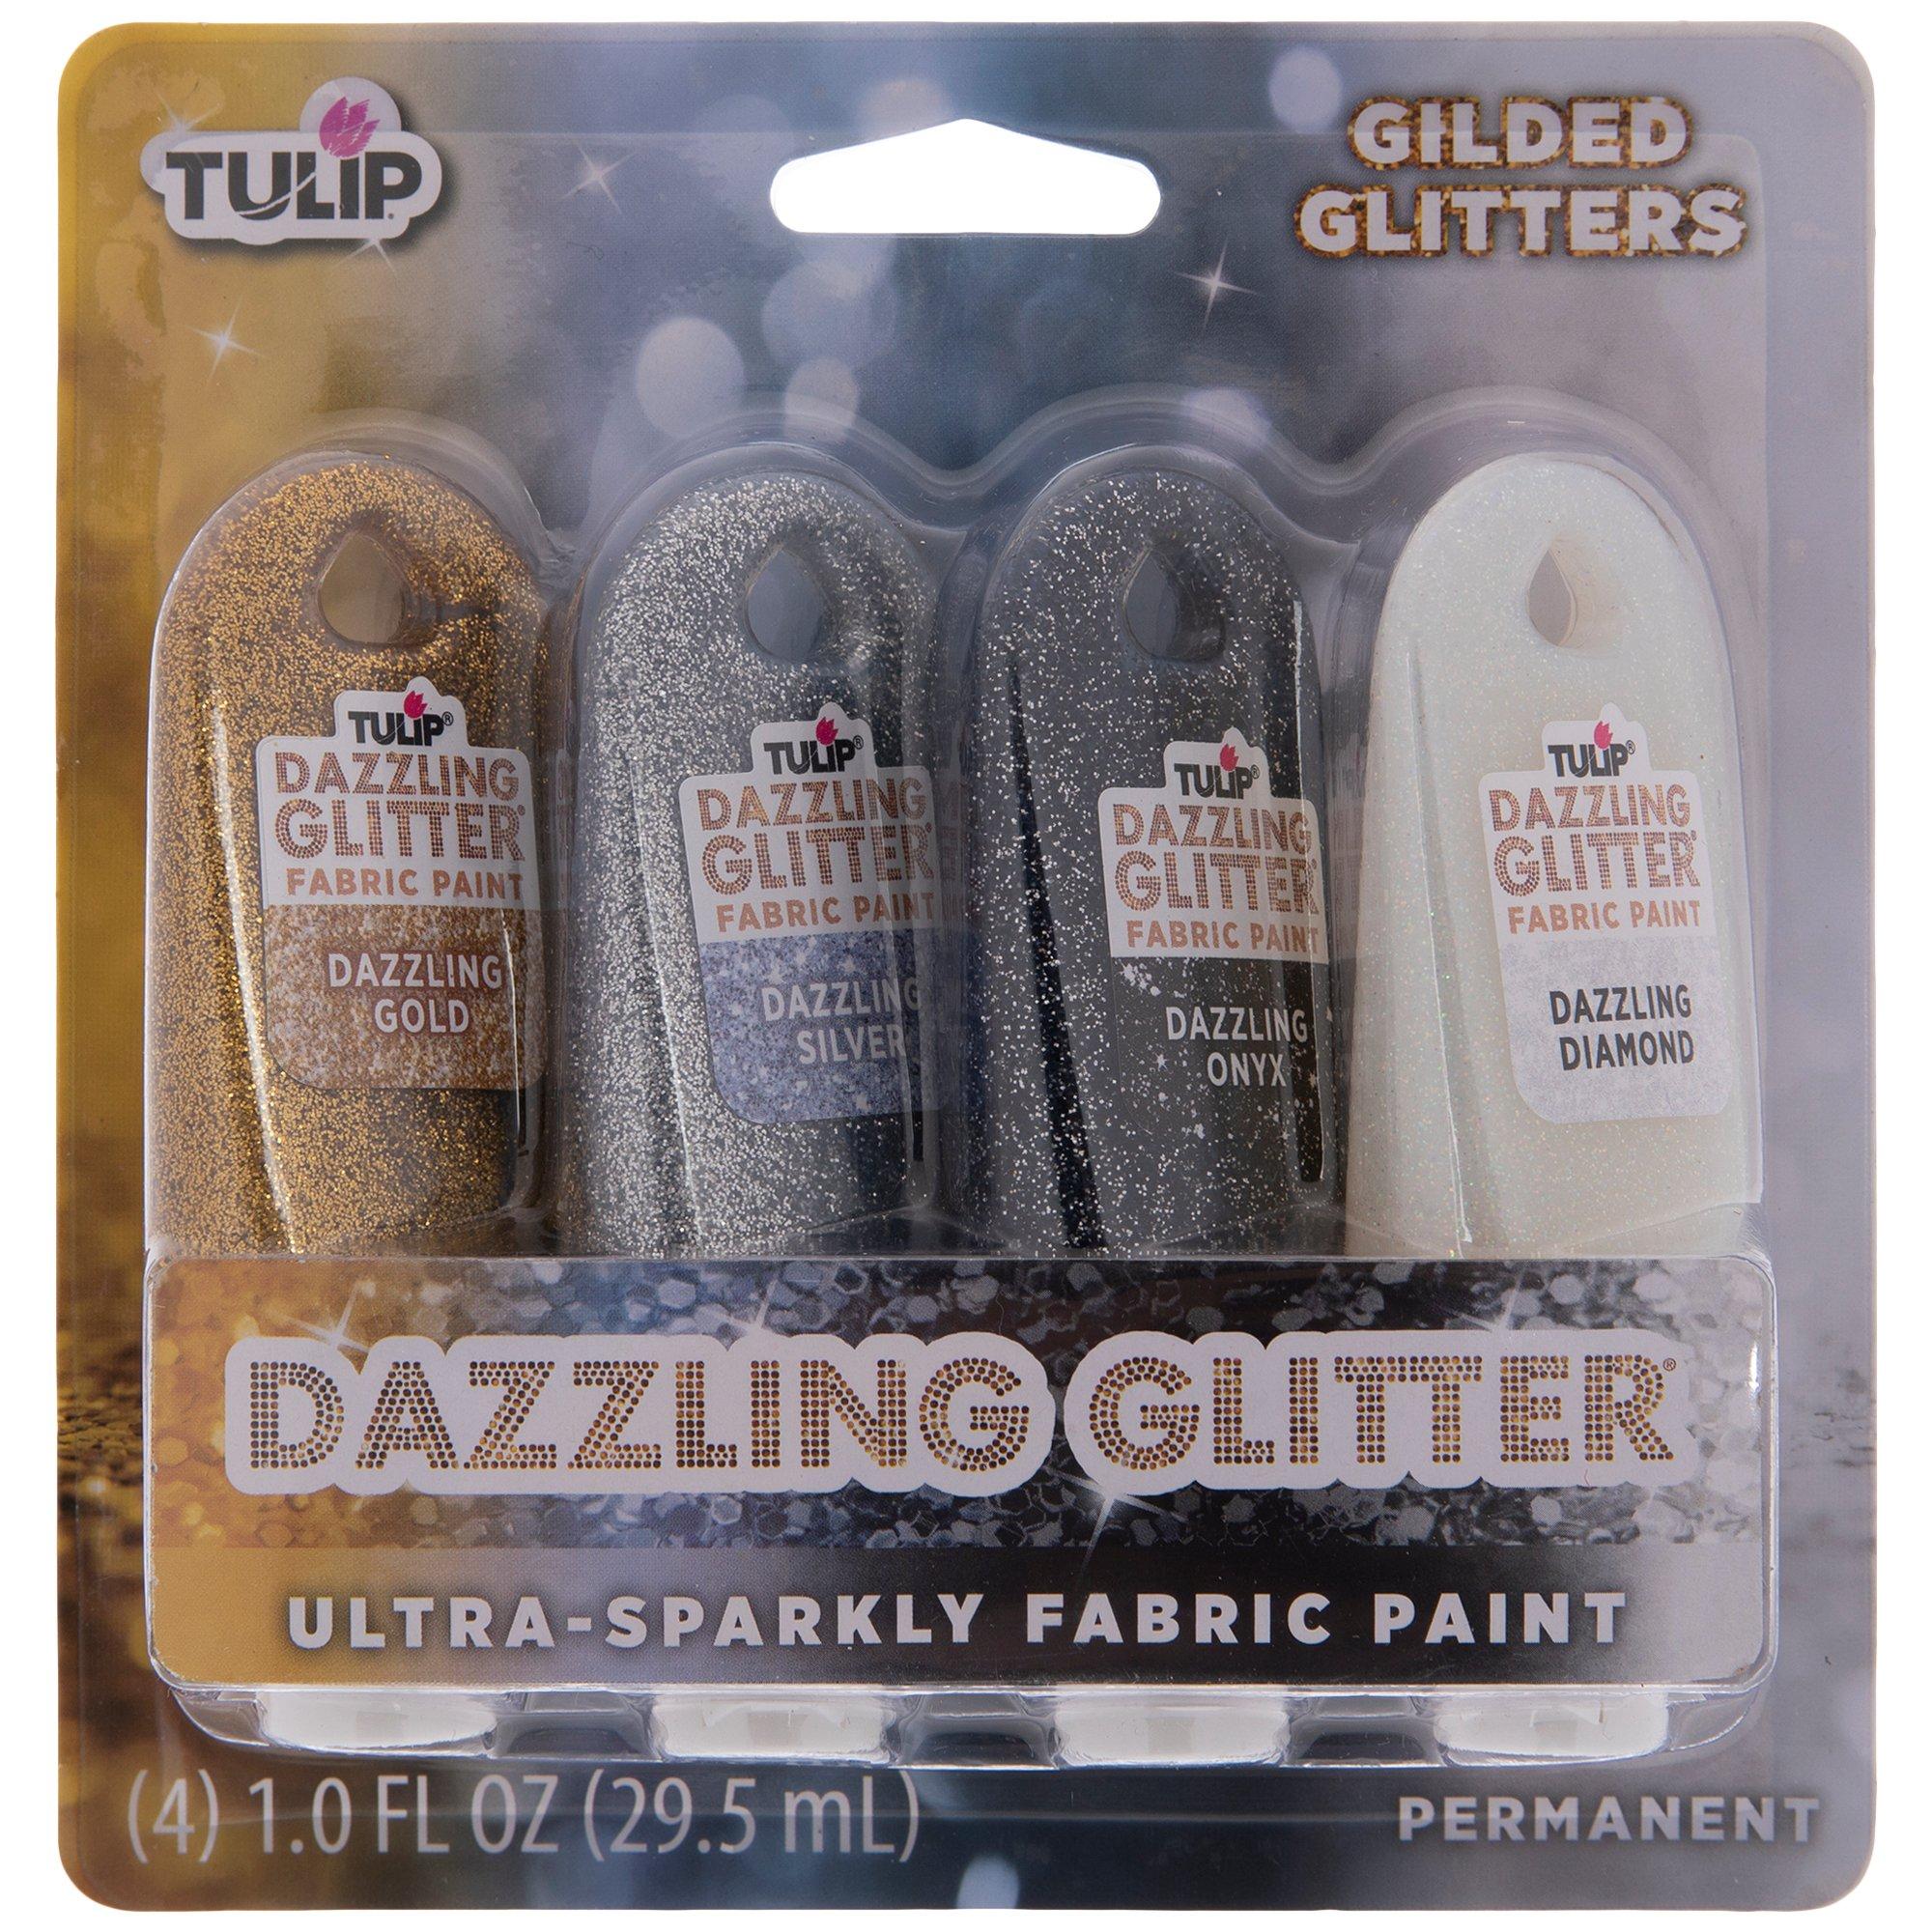 Tulip Dimensional Fabric Paint Set - Jewels, Dazzling Glitter, Set of 5